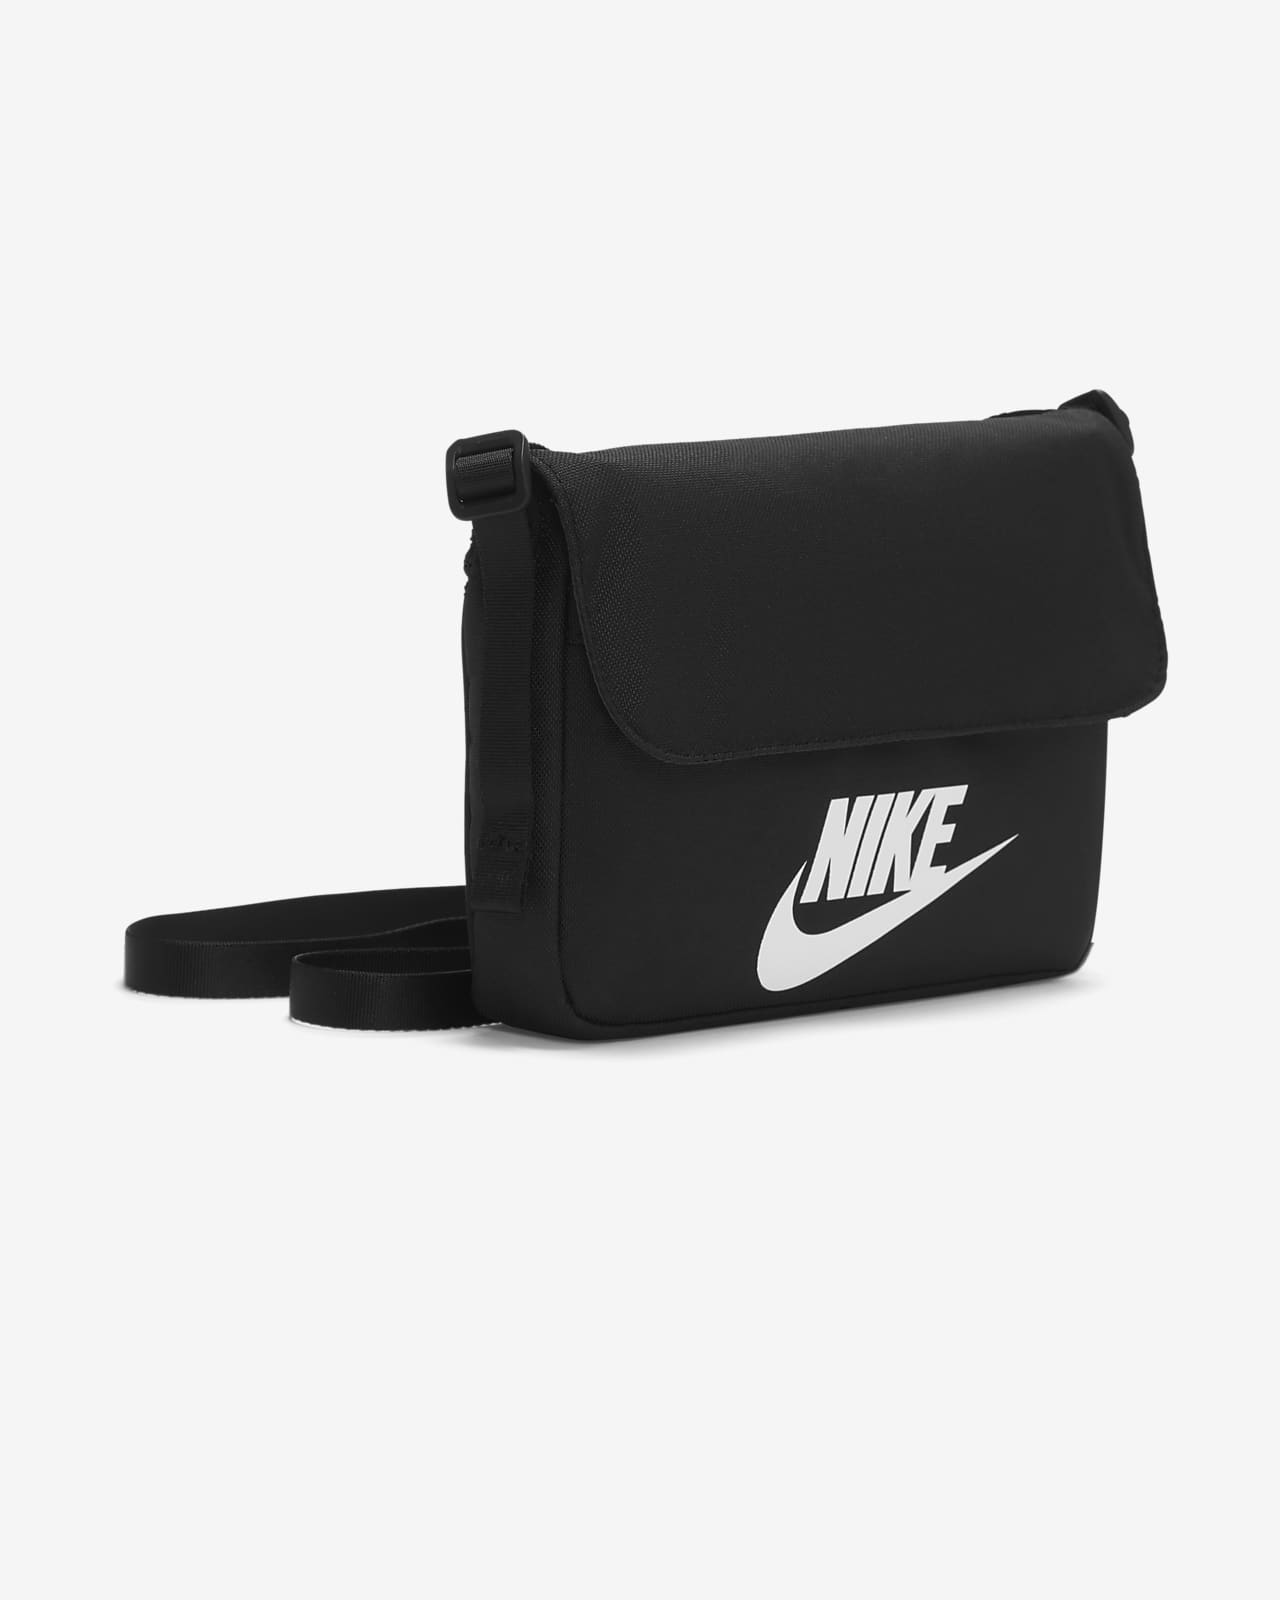 Shoulder bag for women Nike Futura - Nike - Brands - Lifestyle